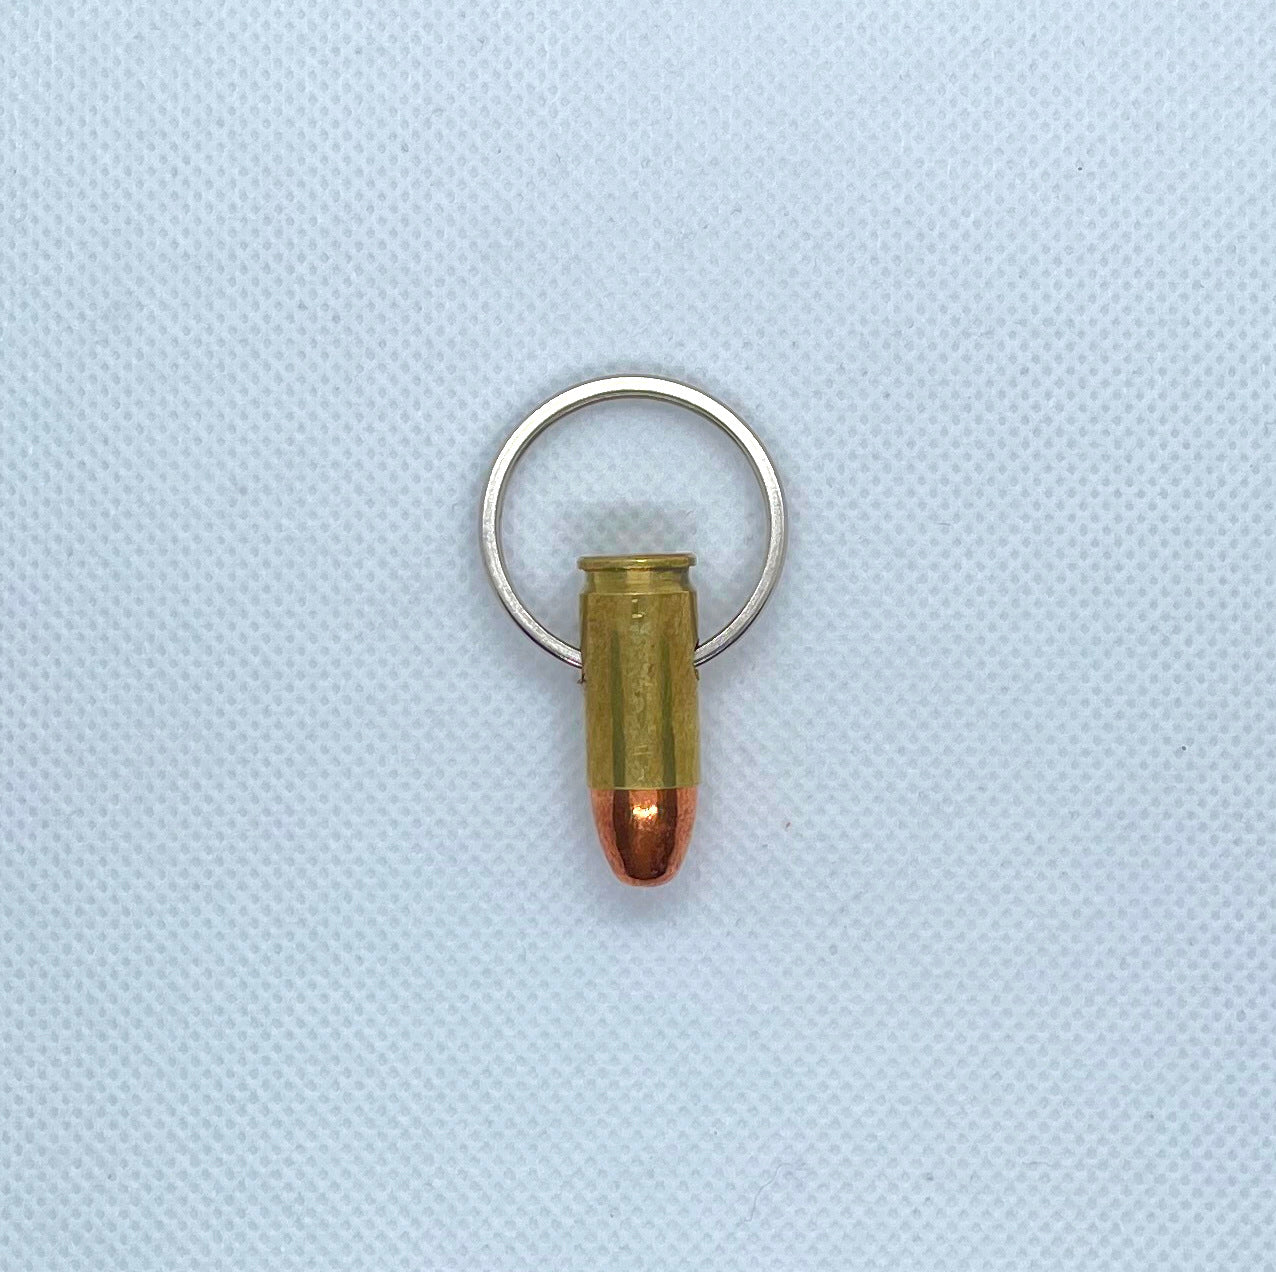 9mm Bullet Key Chain